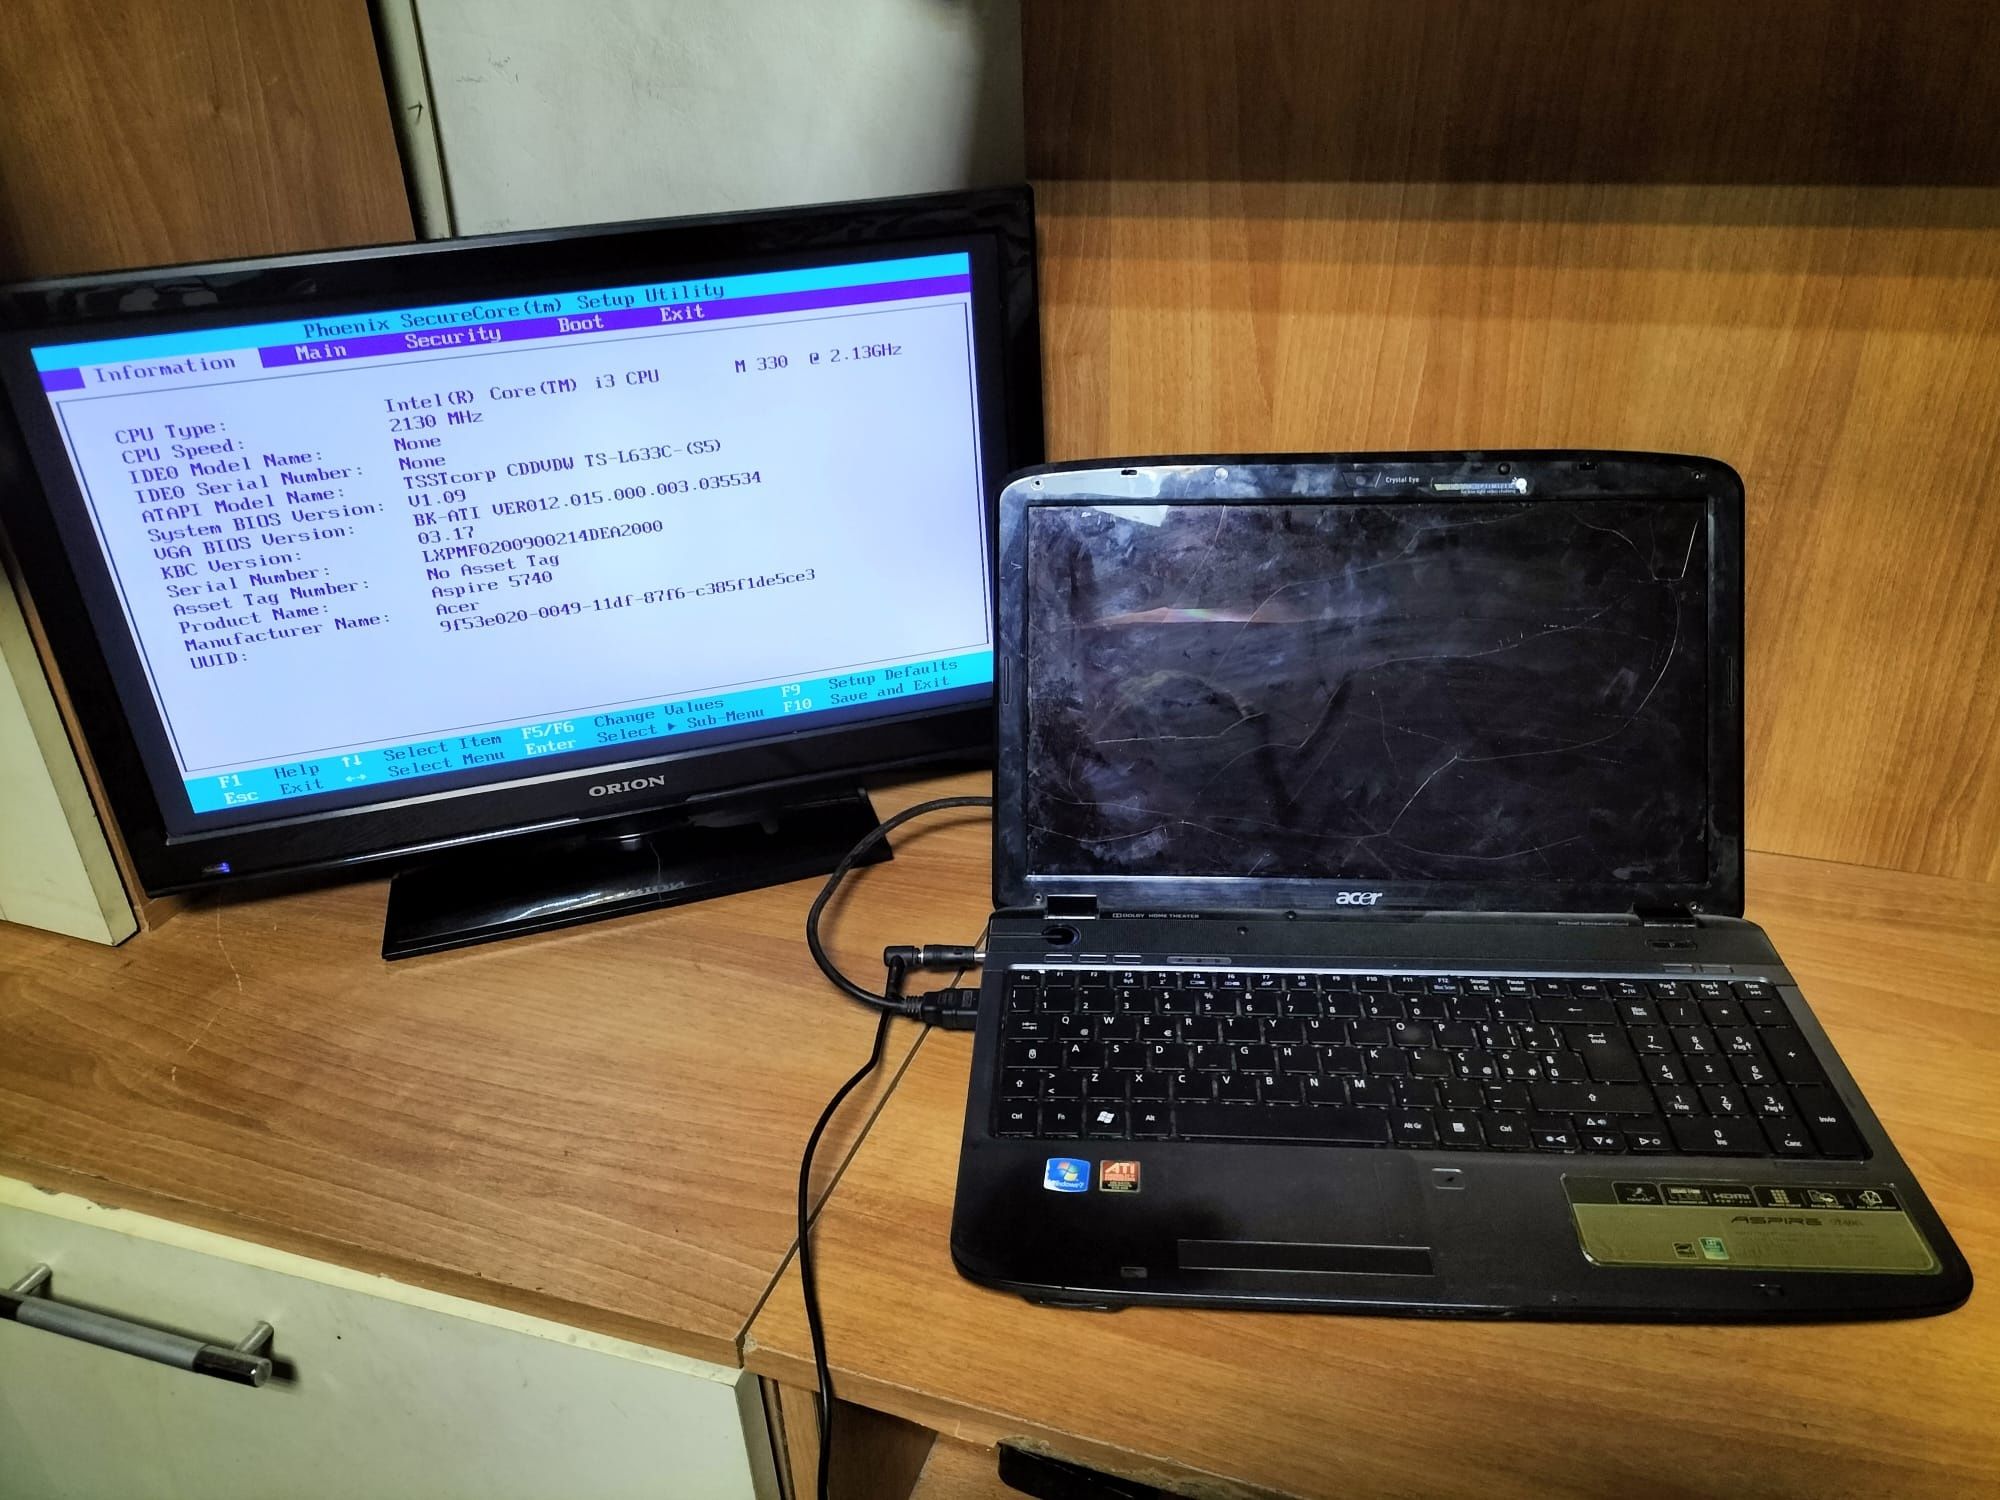 Persona enferma Leer Bloquear Laptop Acer Aspire 5740 i3 330m piese Lumina • OLX.ro